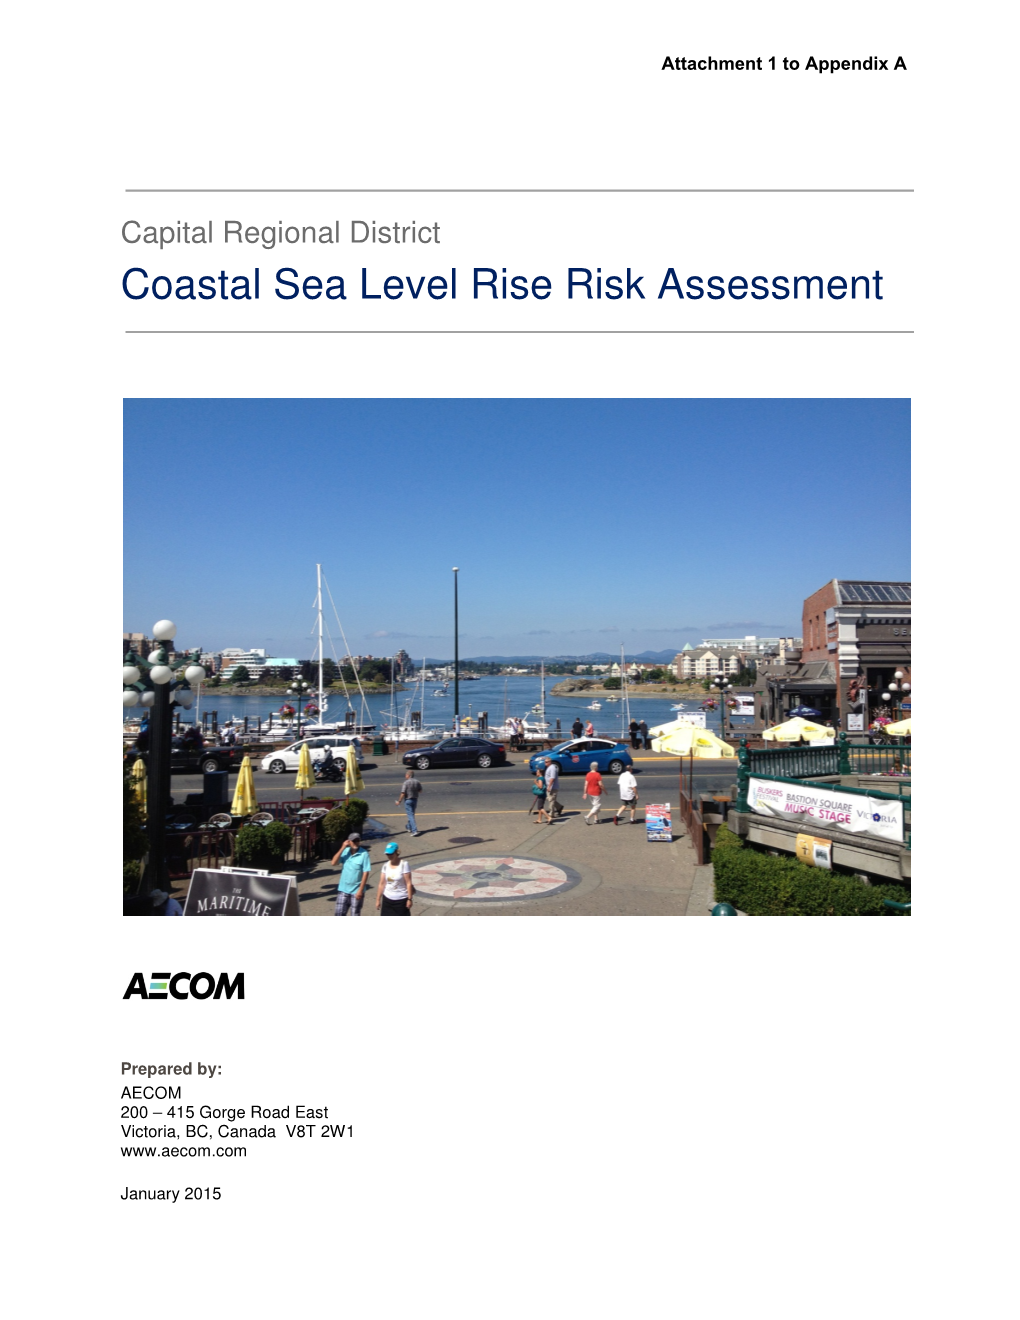 CRD – Coastal Sea Level Rise Risk Assessment